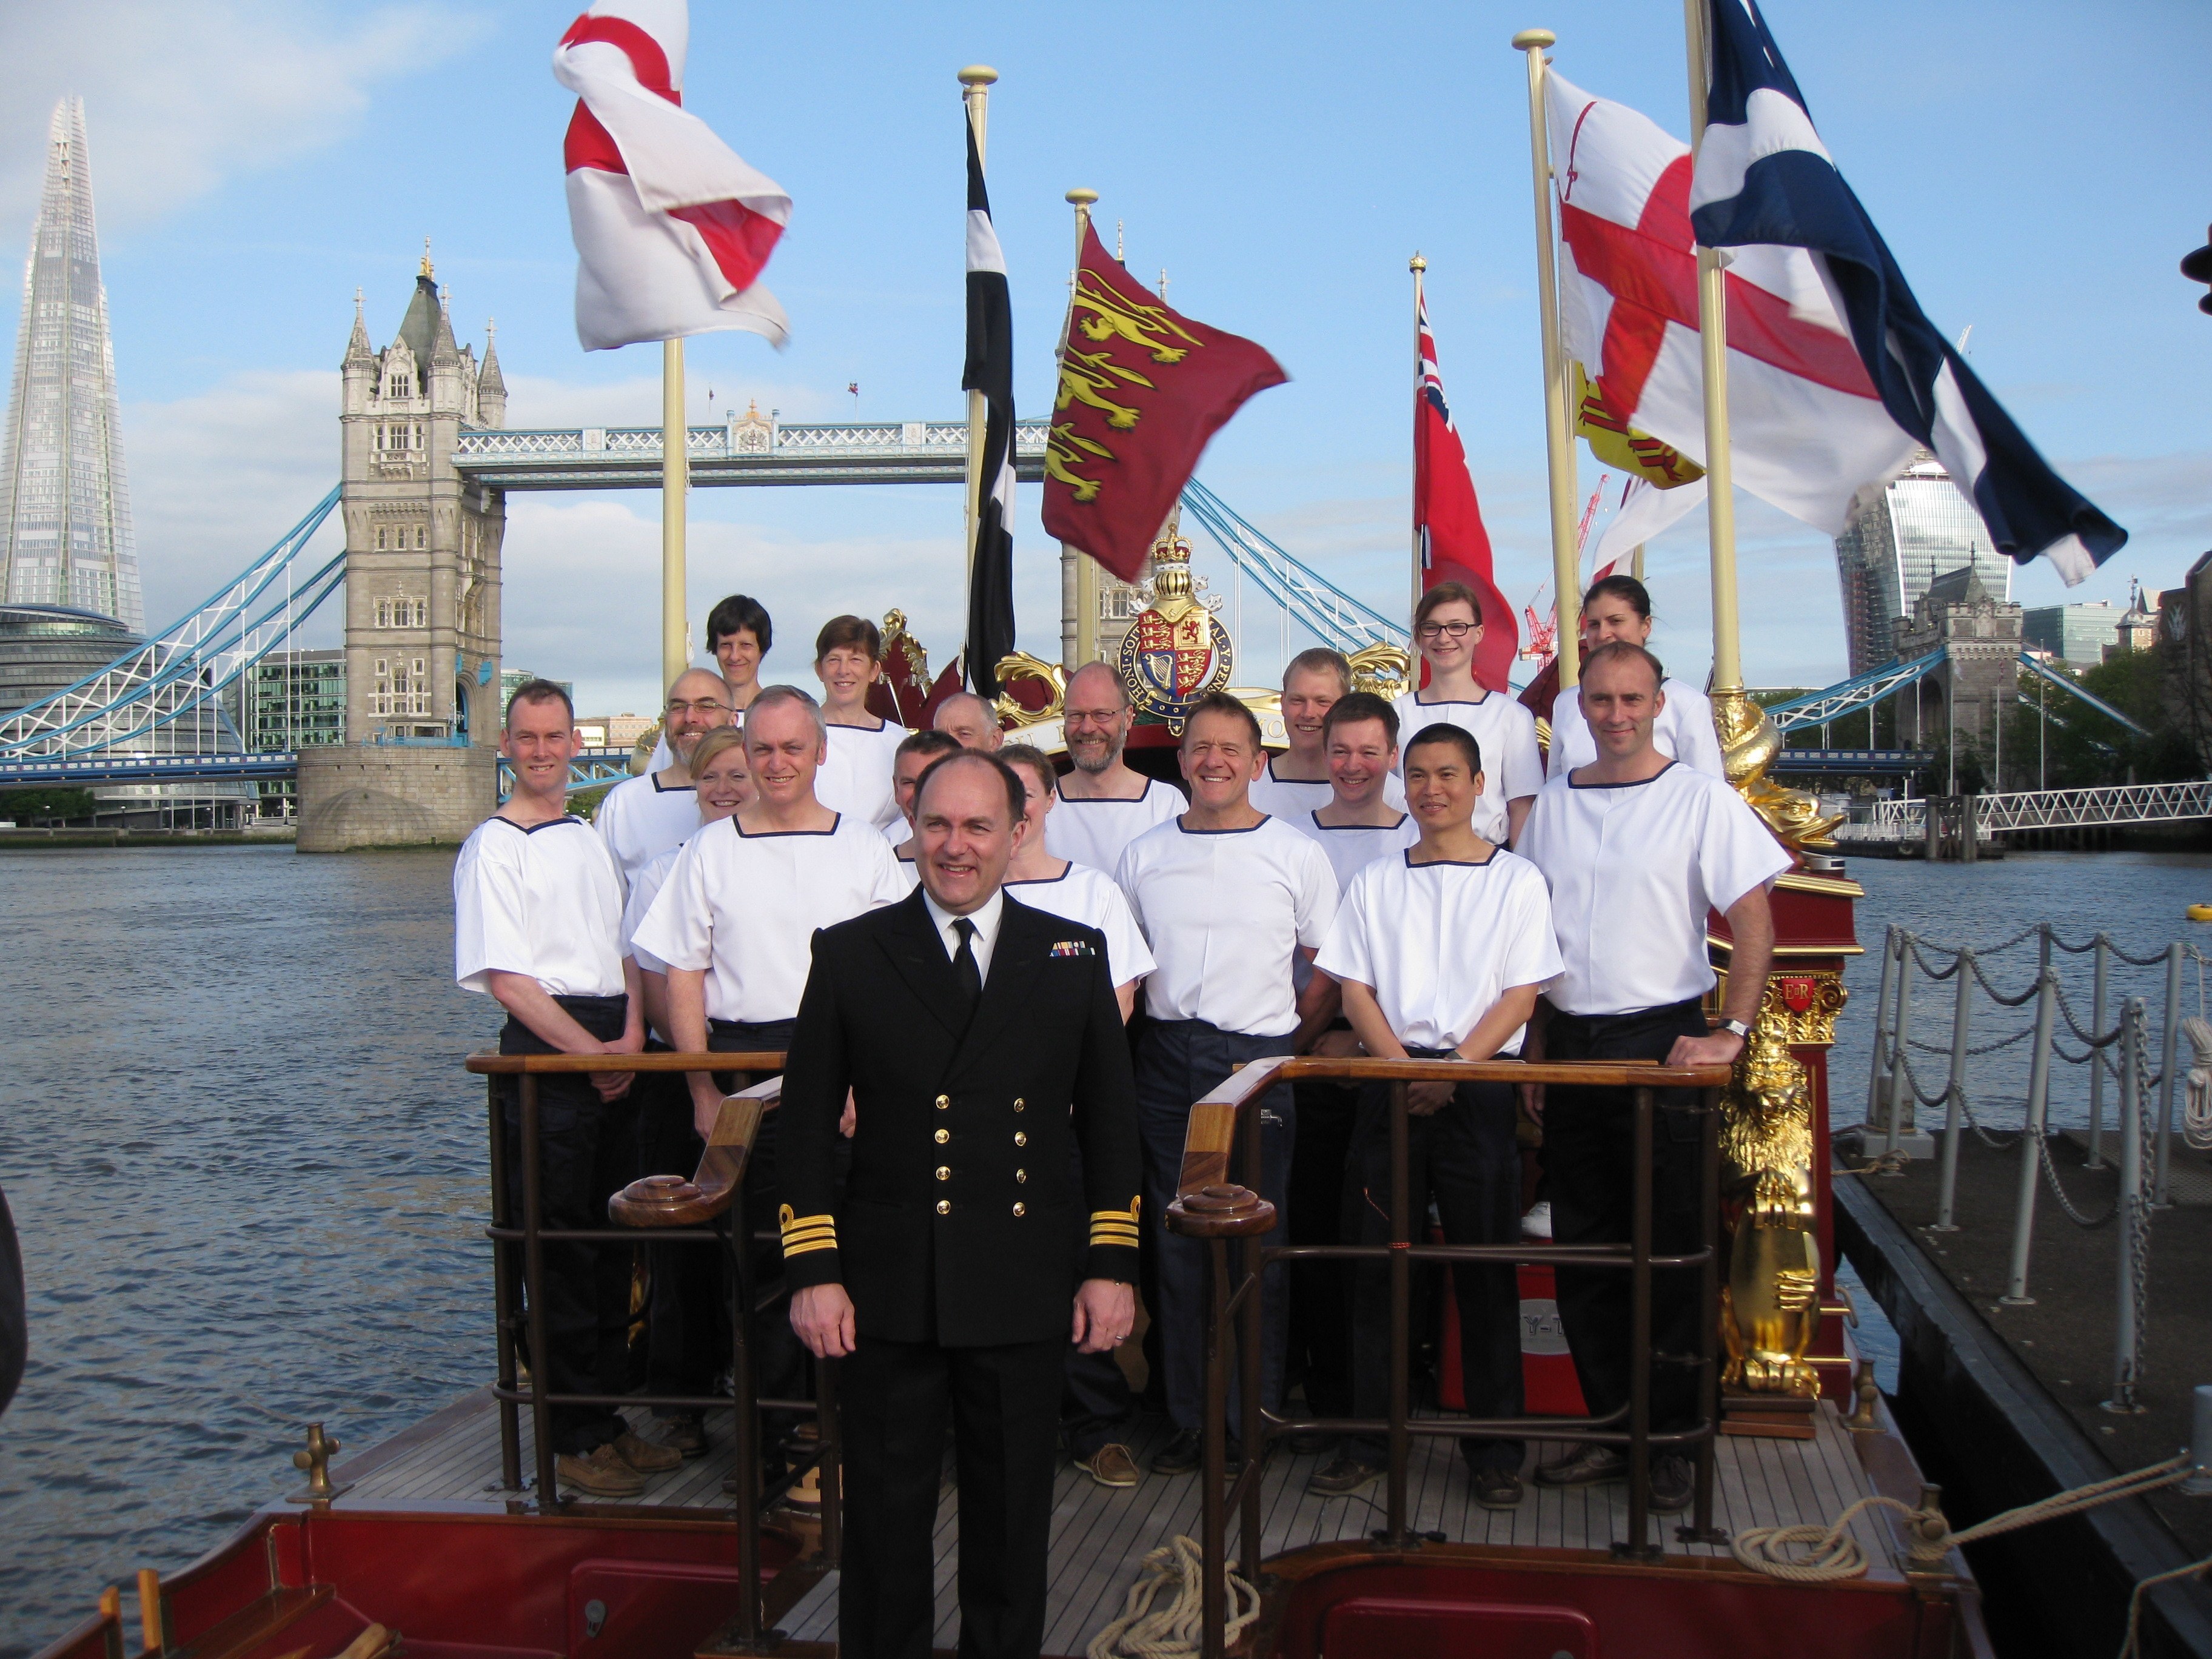 Royal Navy Reserve HMS President crew